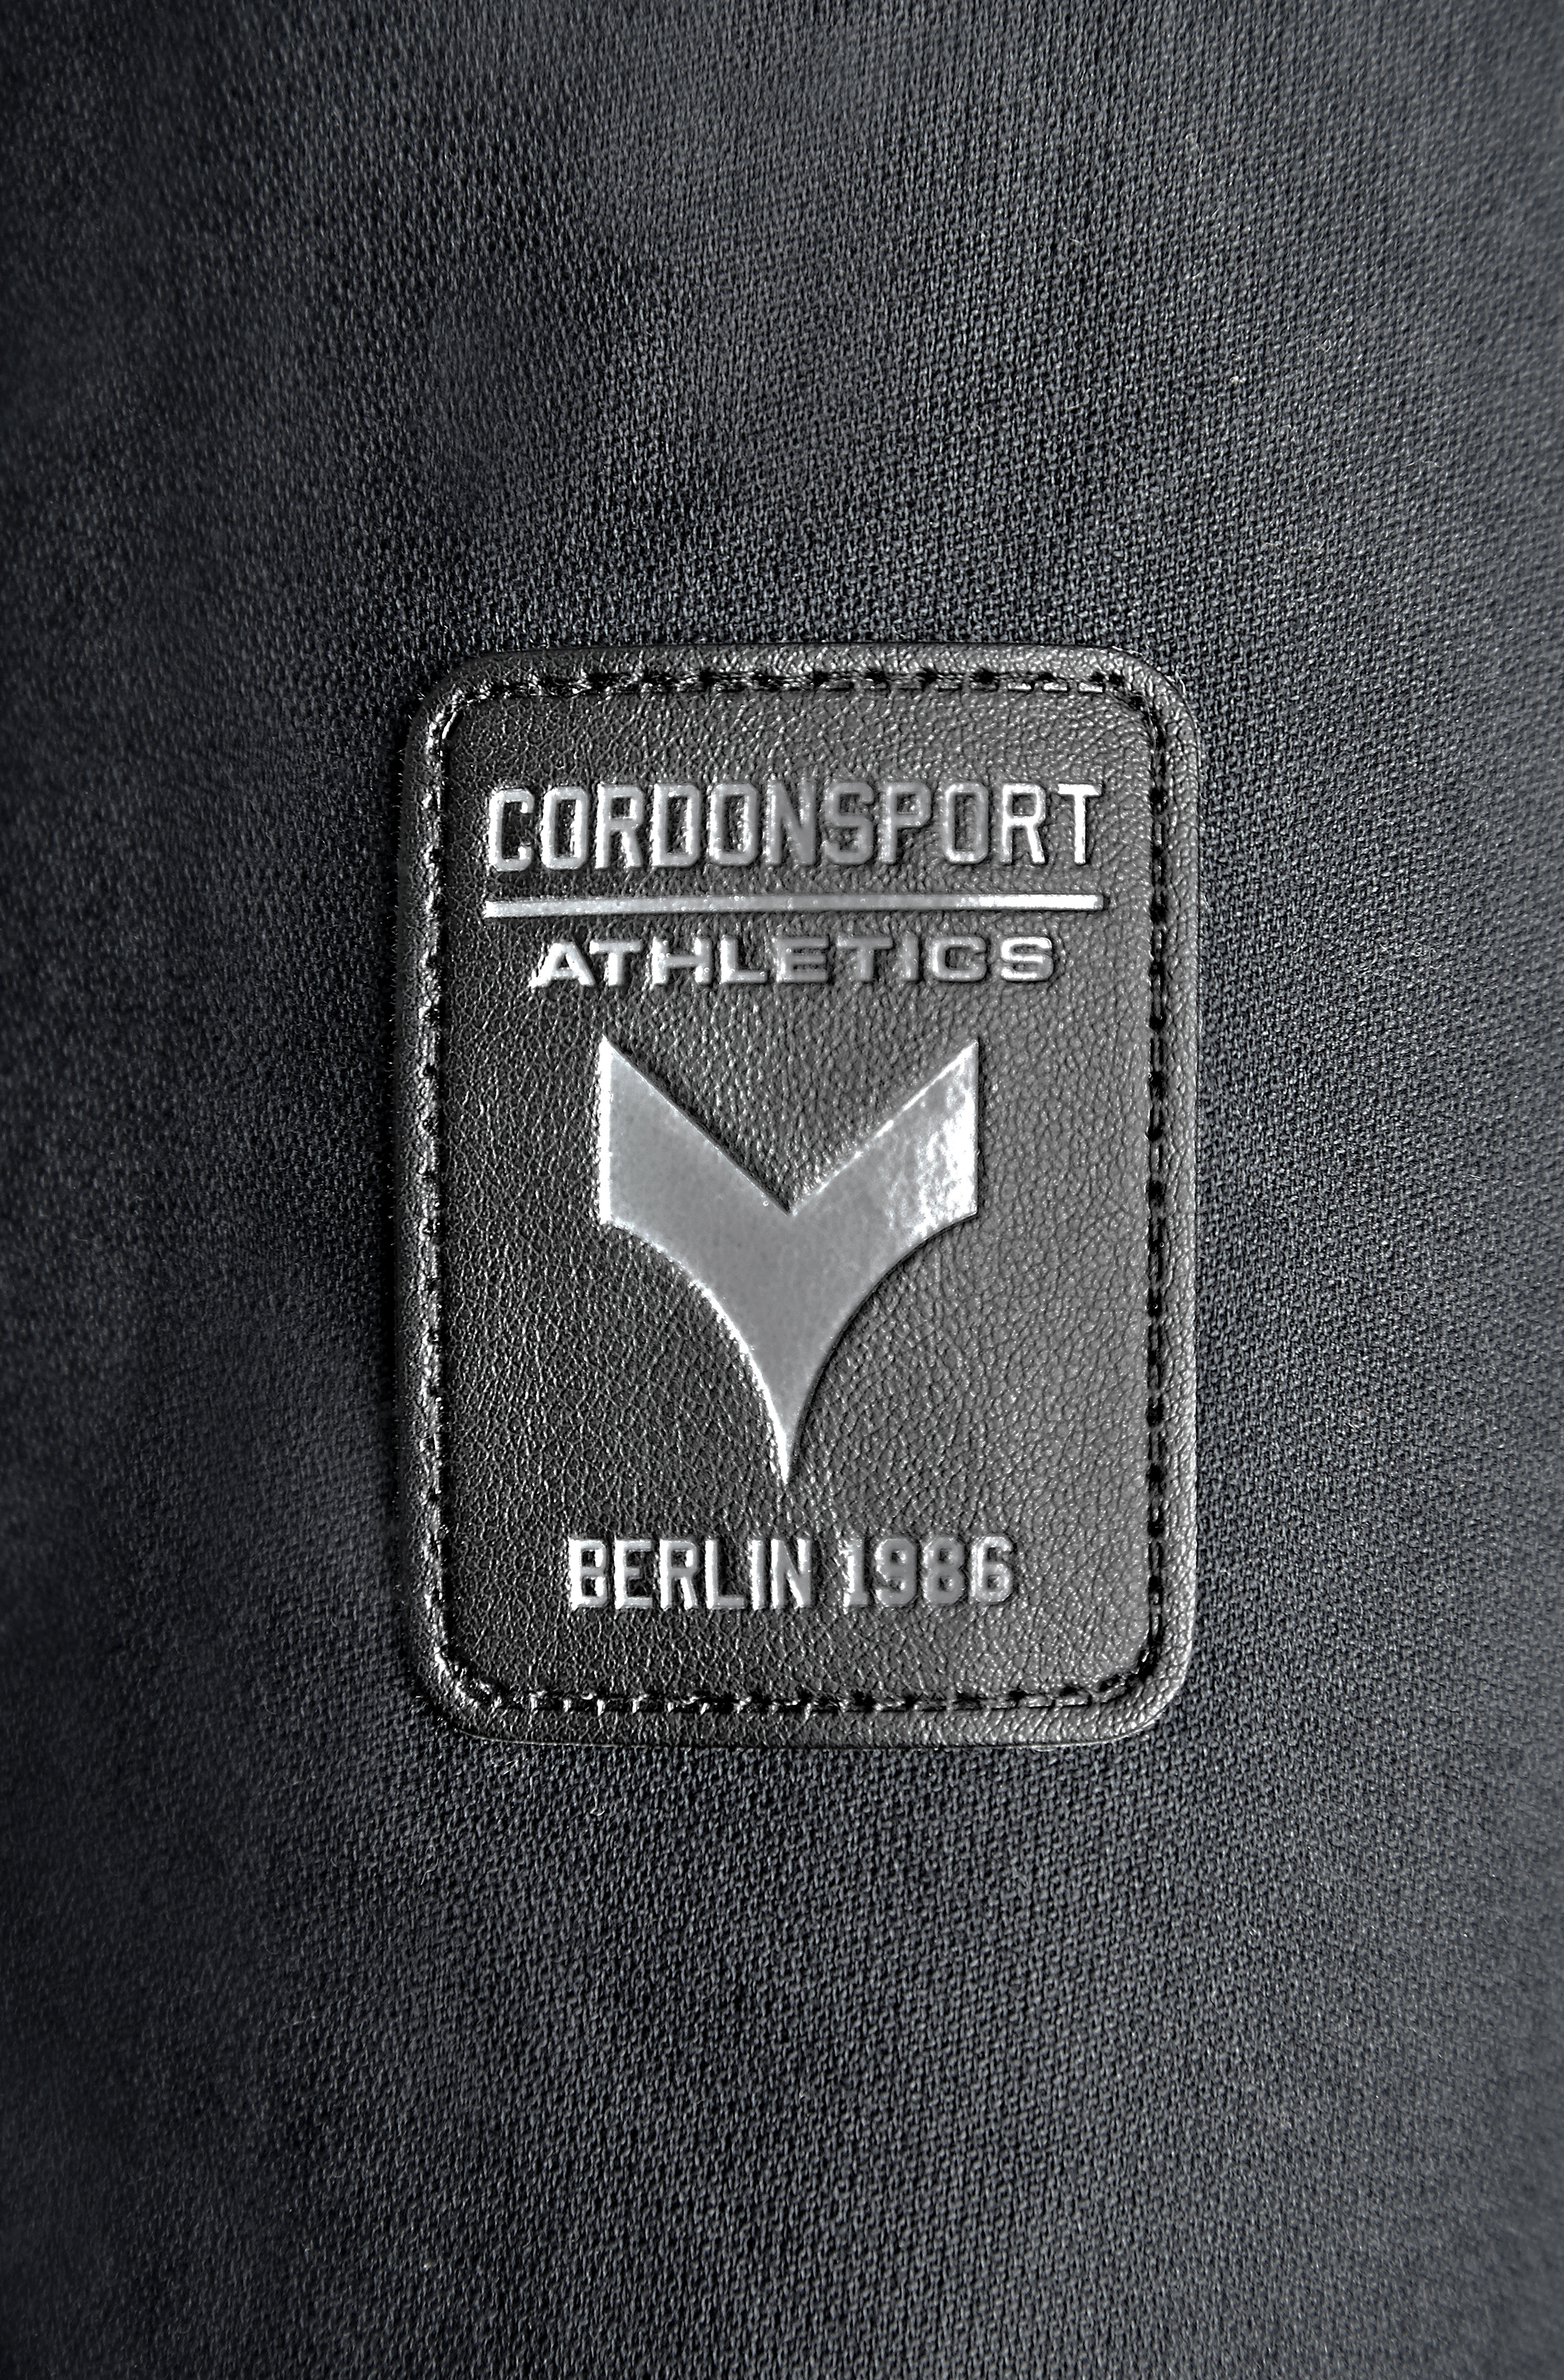 Cordon Active  Hood Jacket 